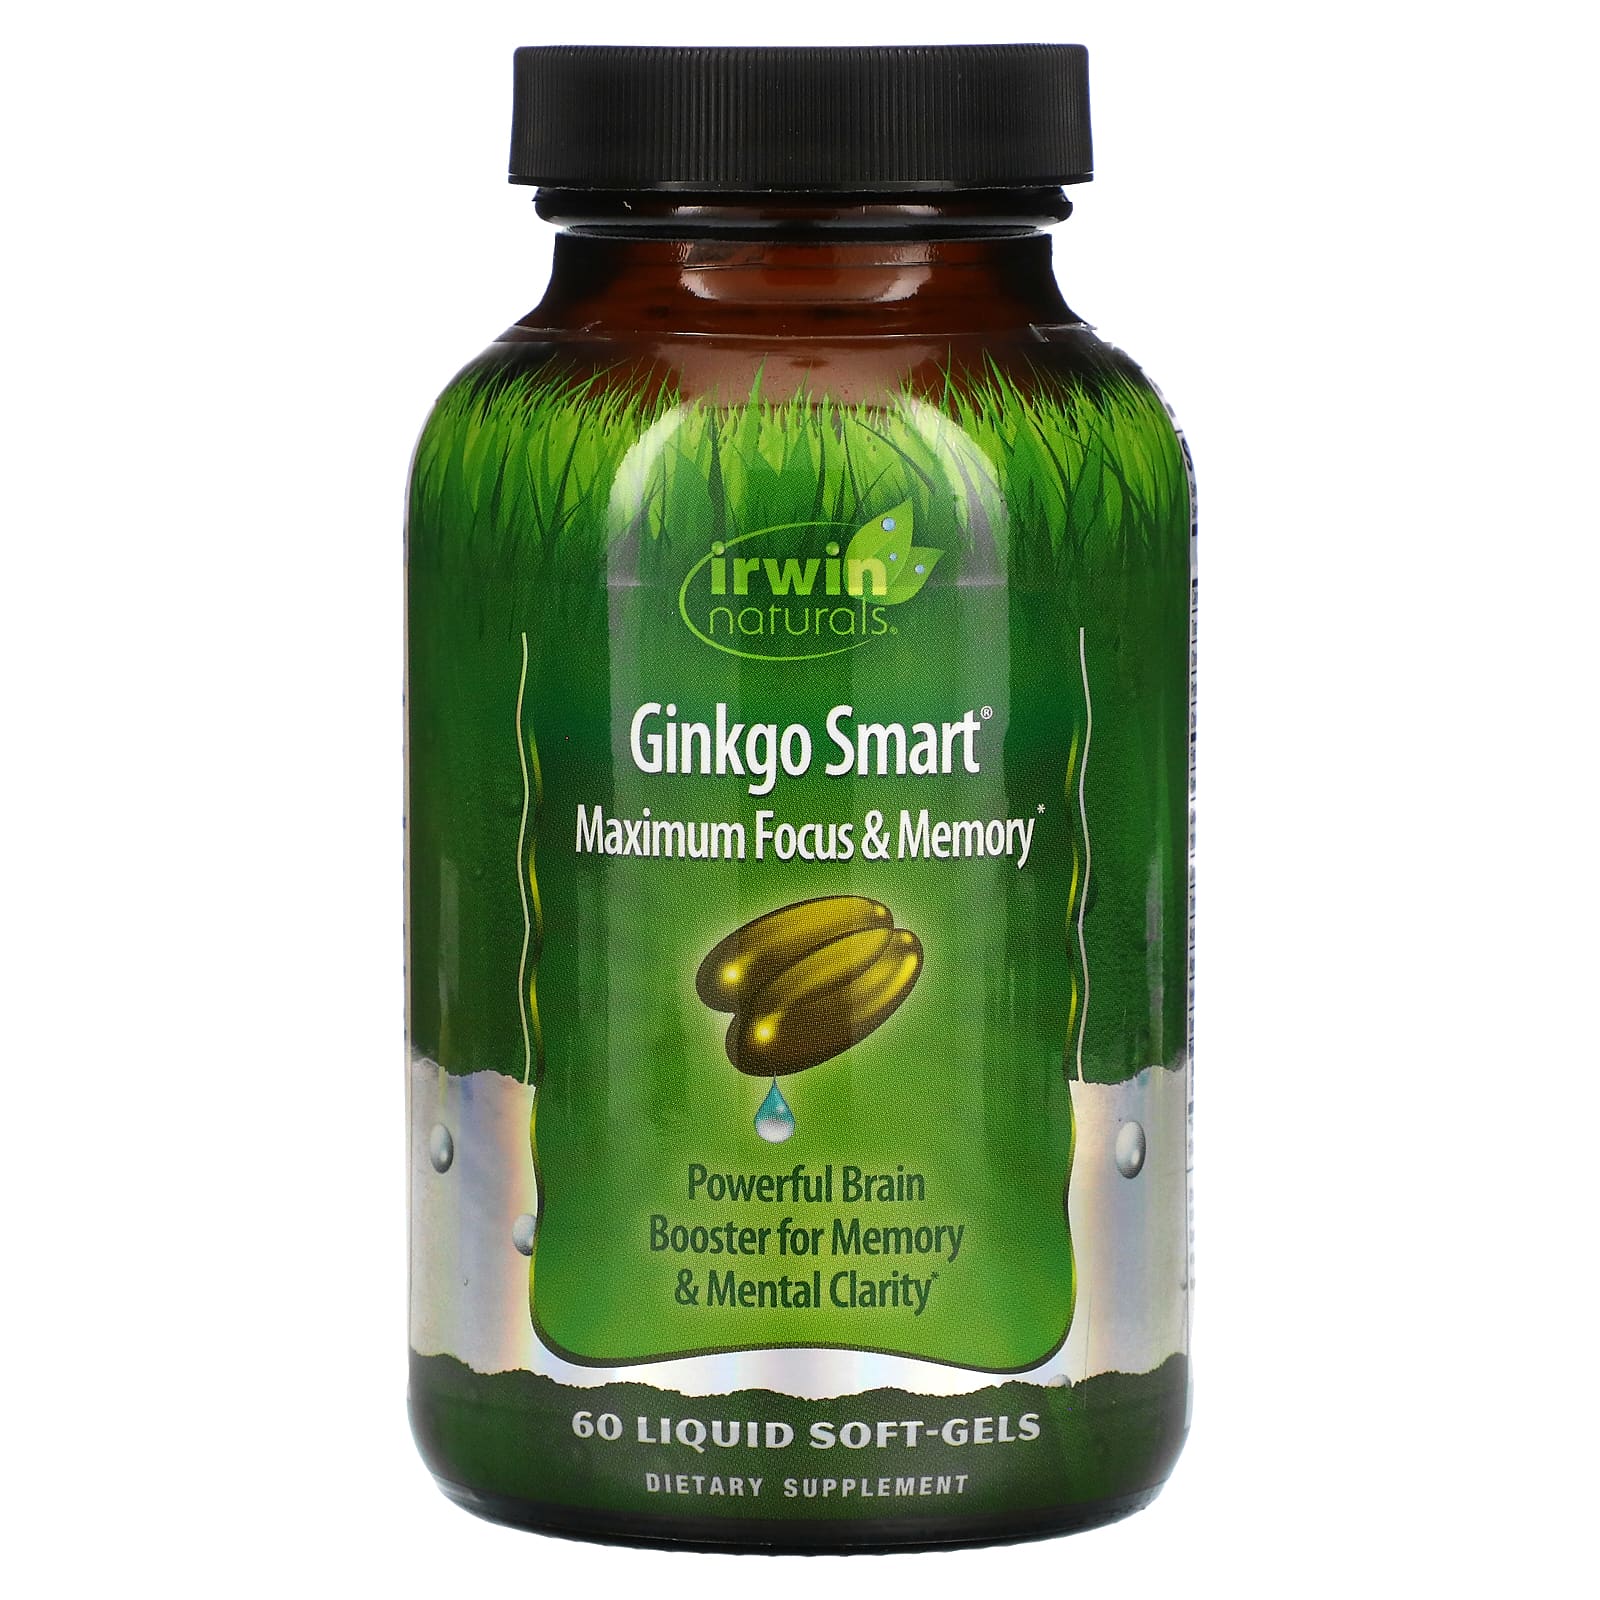 Irwin Naturals Ginkgo Smart Maximum Focus & Memory Dietary Supplement Liquid Softgels - 60ct